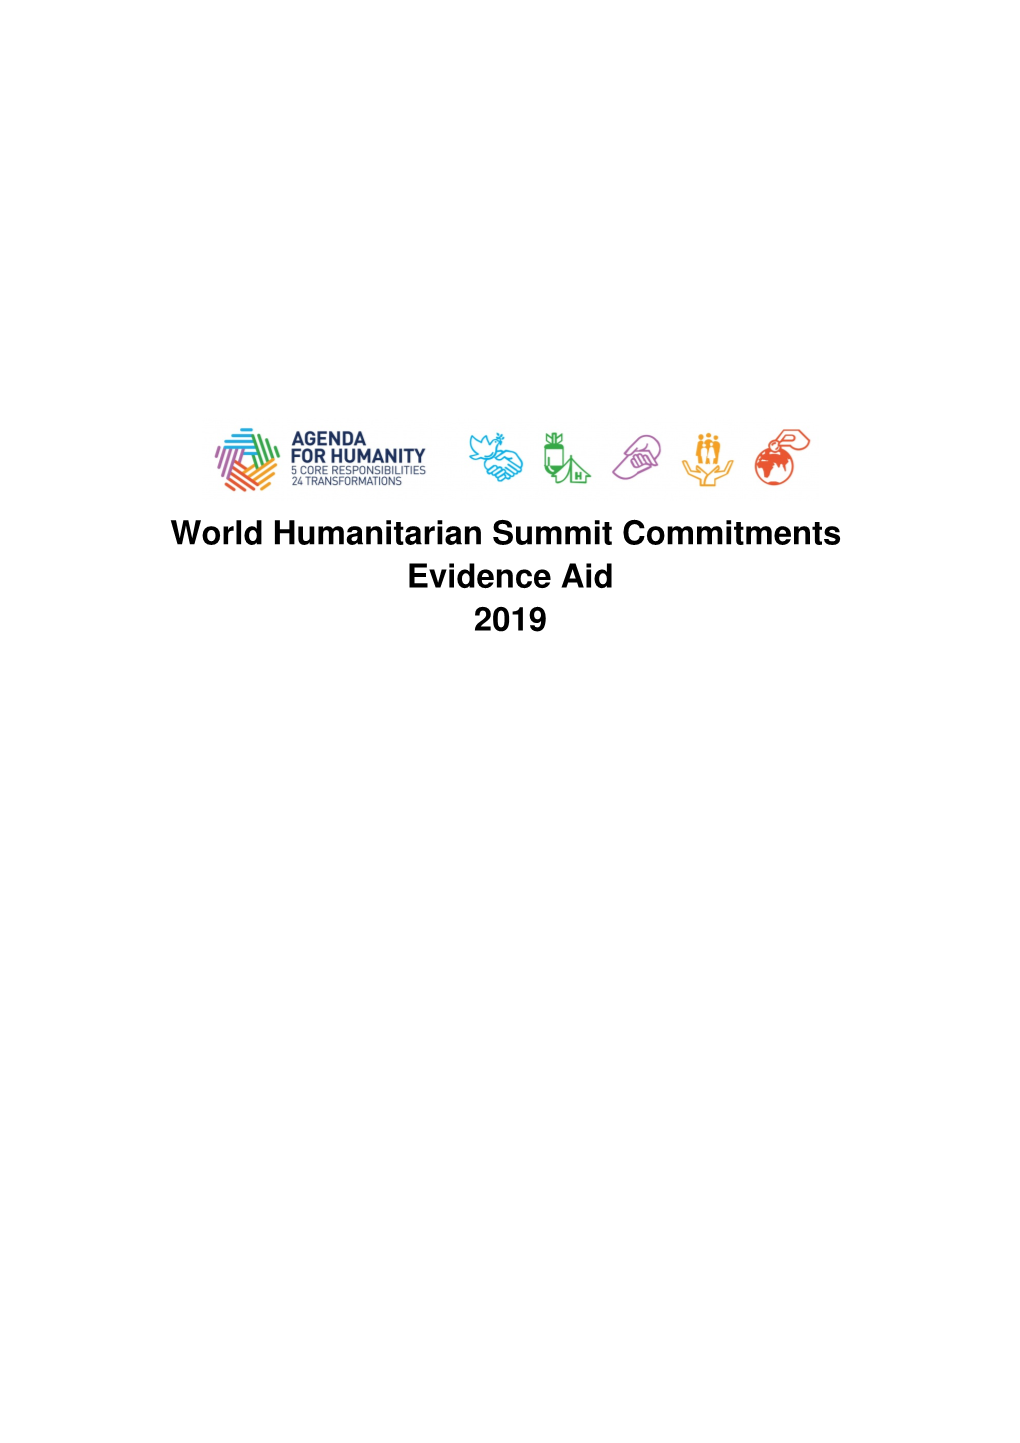 World Humanitarian Summit Commitments Evidence Aid 2019 Individual Commitments